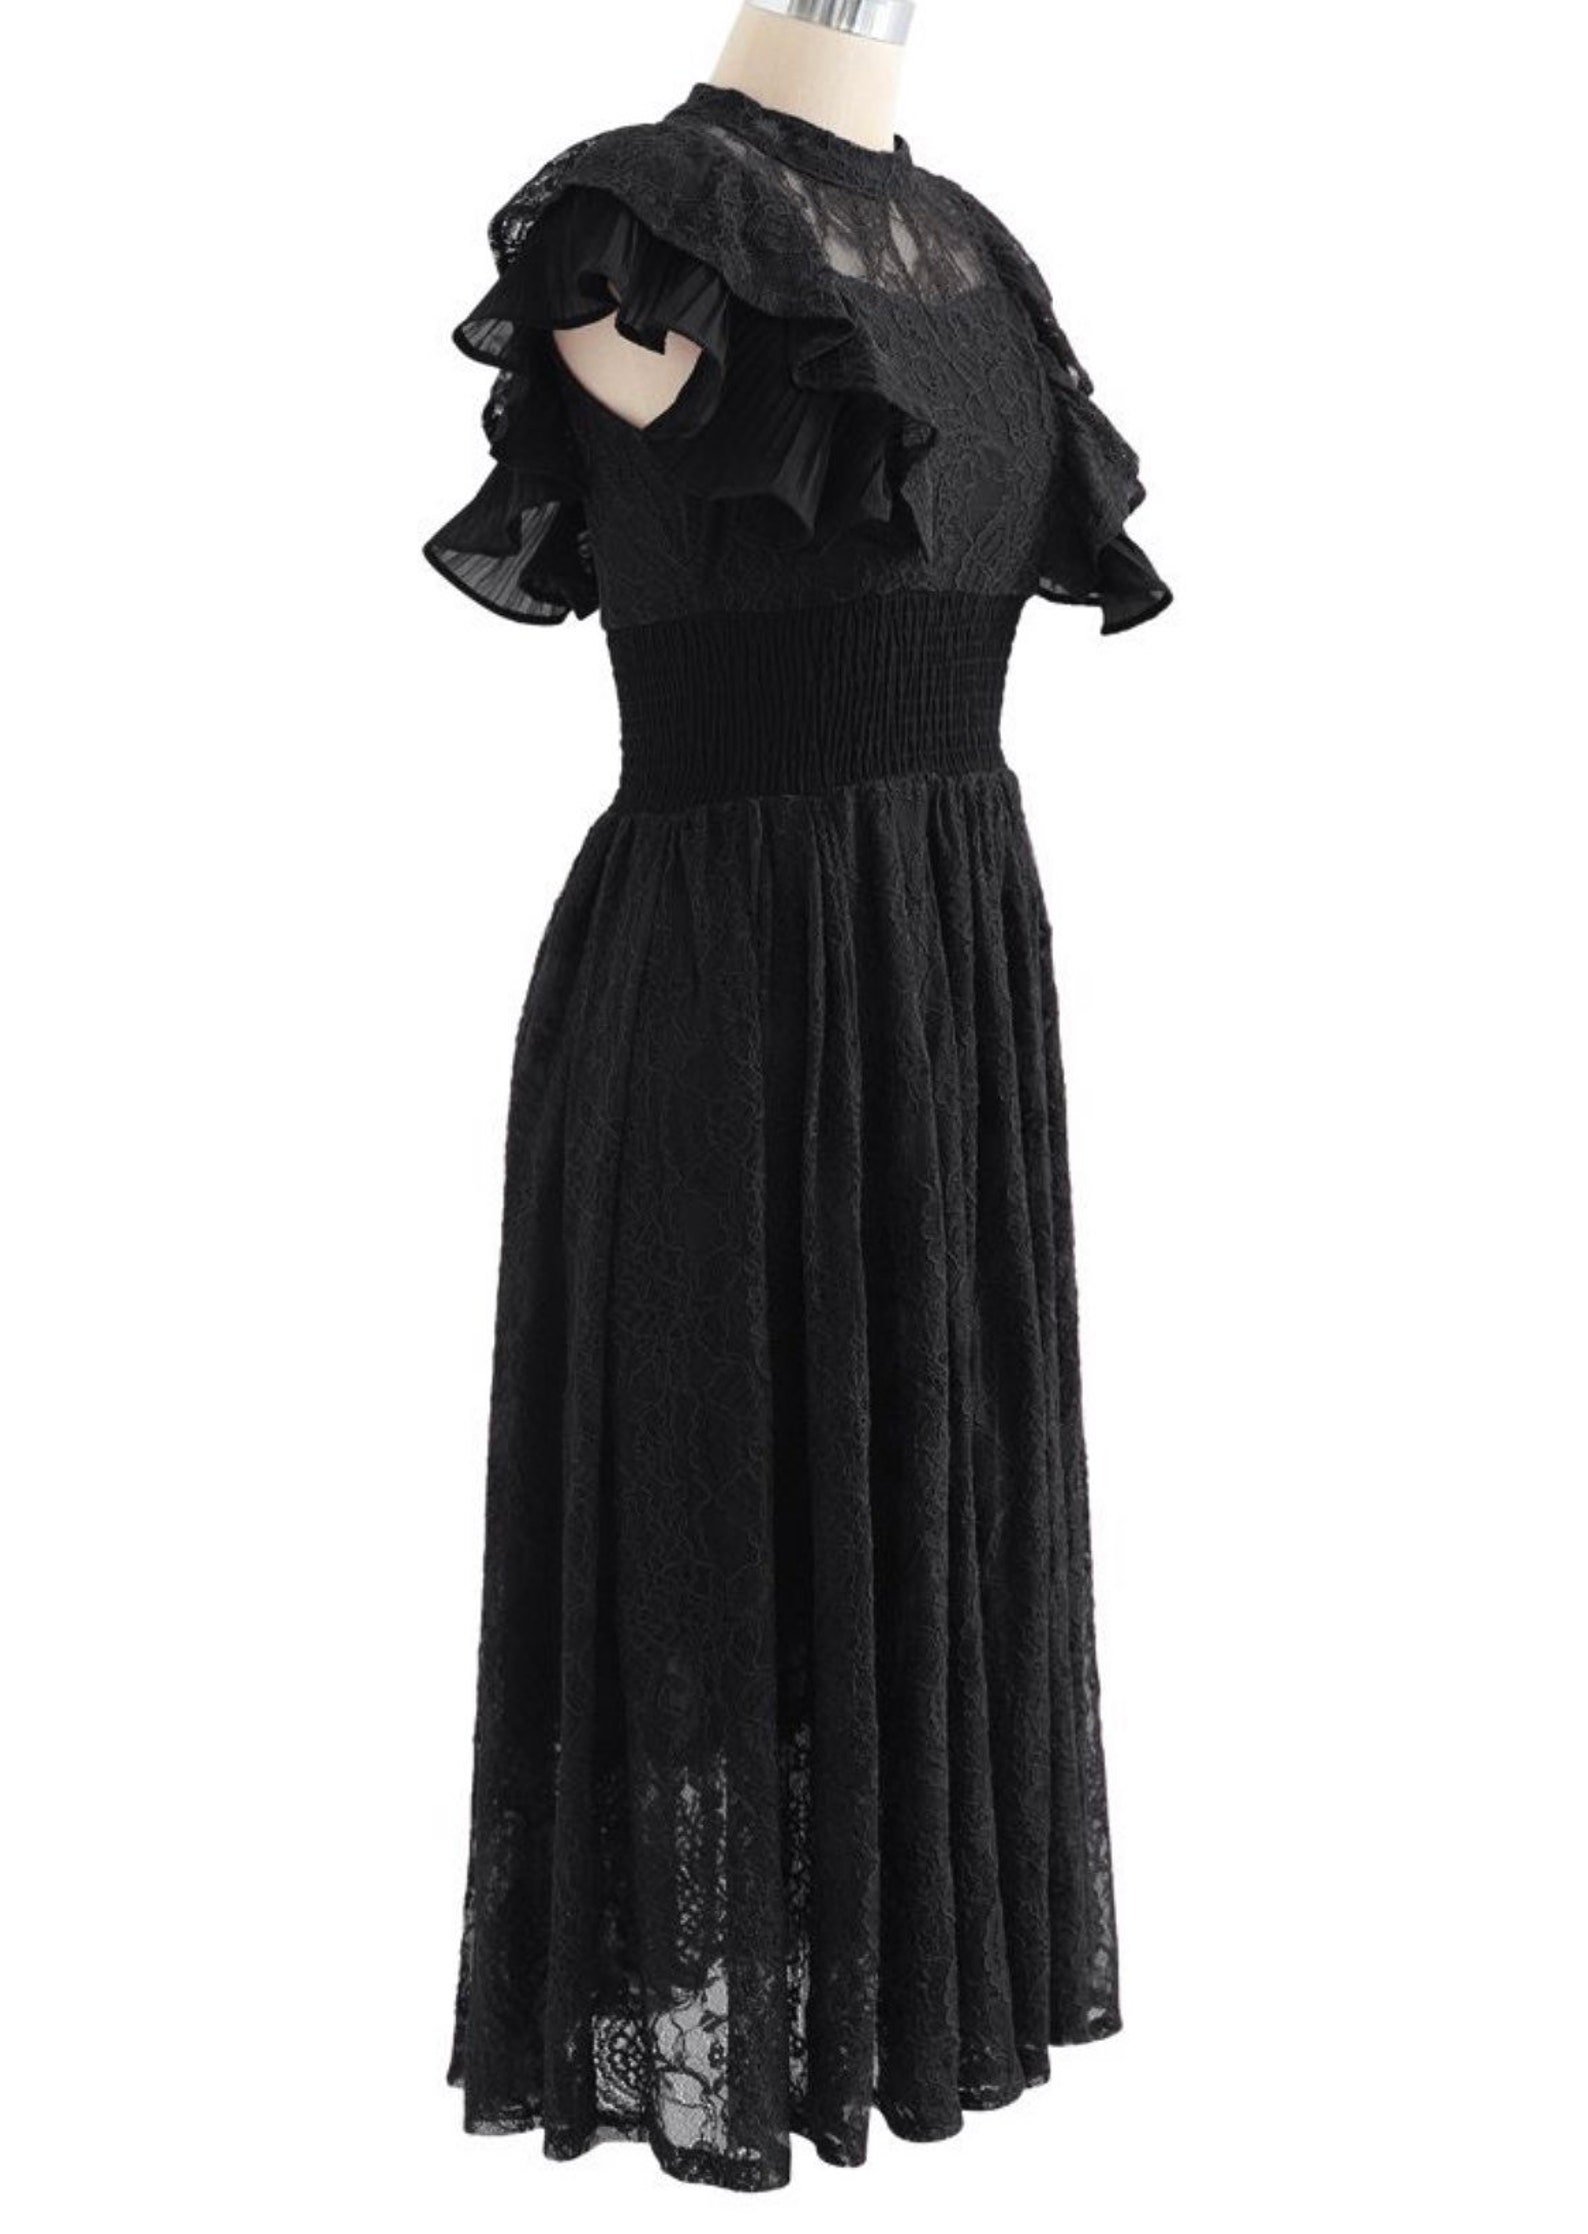 Wednesday Addams Raven Dance Black Lace Dress jenna Ortega - Etsy New ...